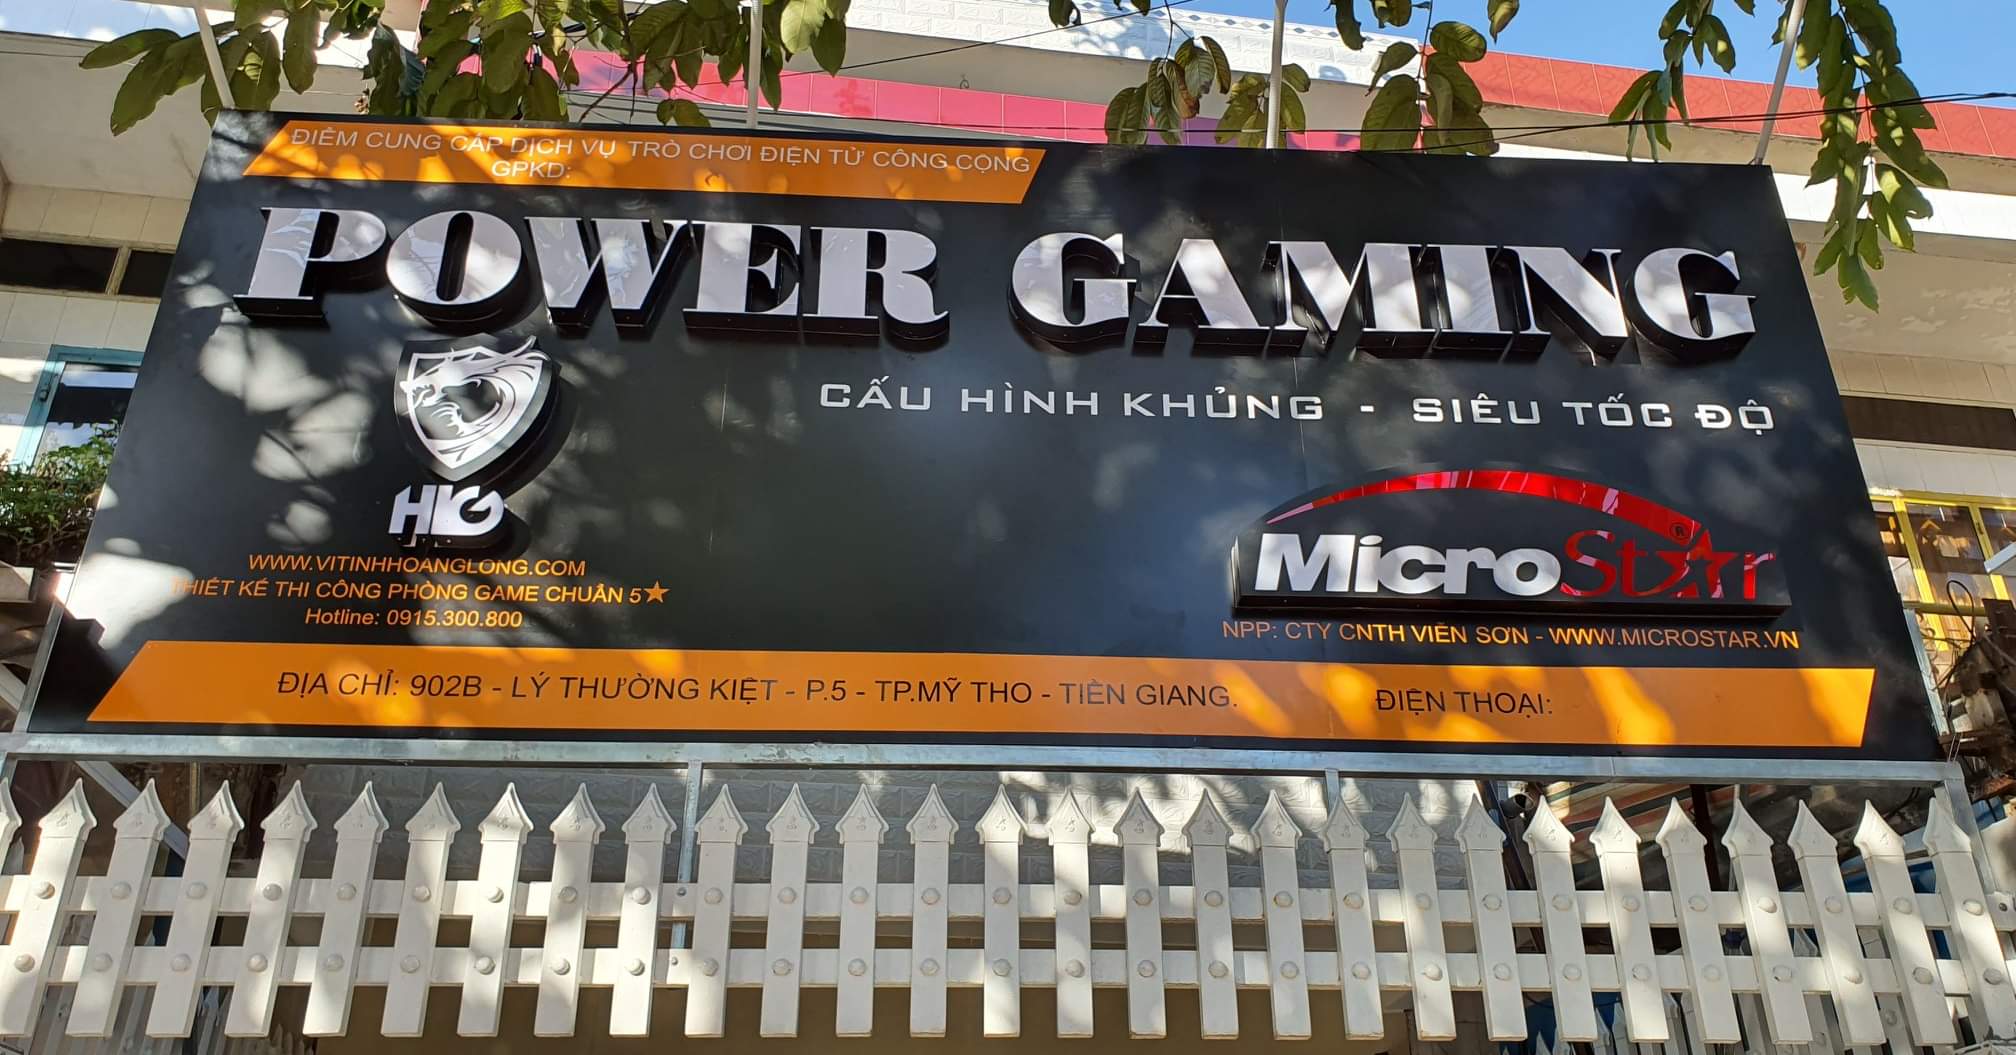 Power Gaming Center ảnh 1